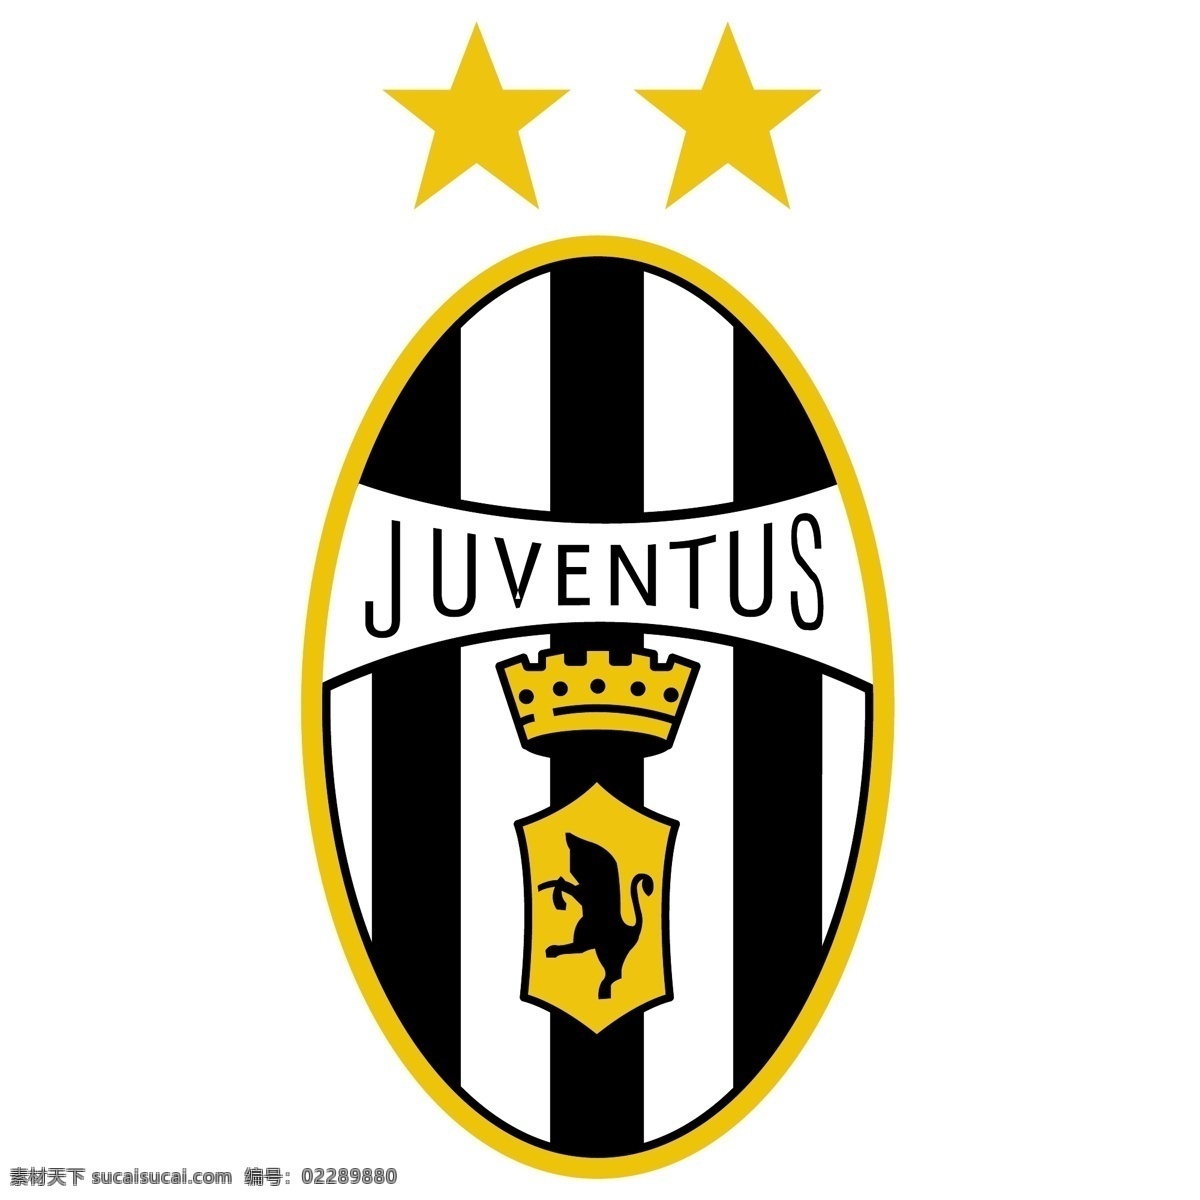 juventus 标识标志图标 世界 足球 俱乐部队 徽 矢量图库